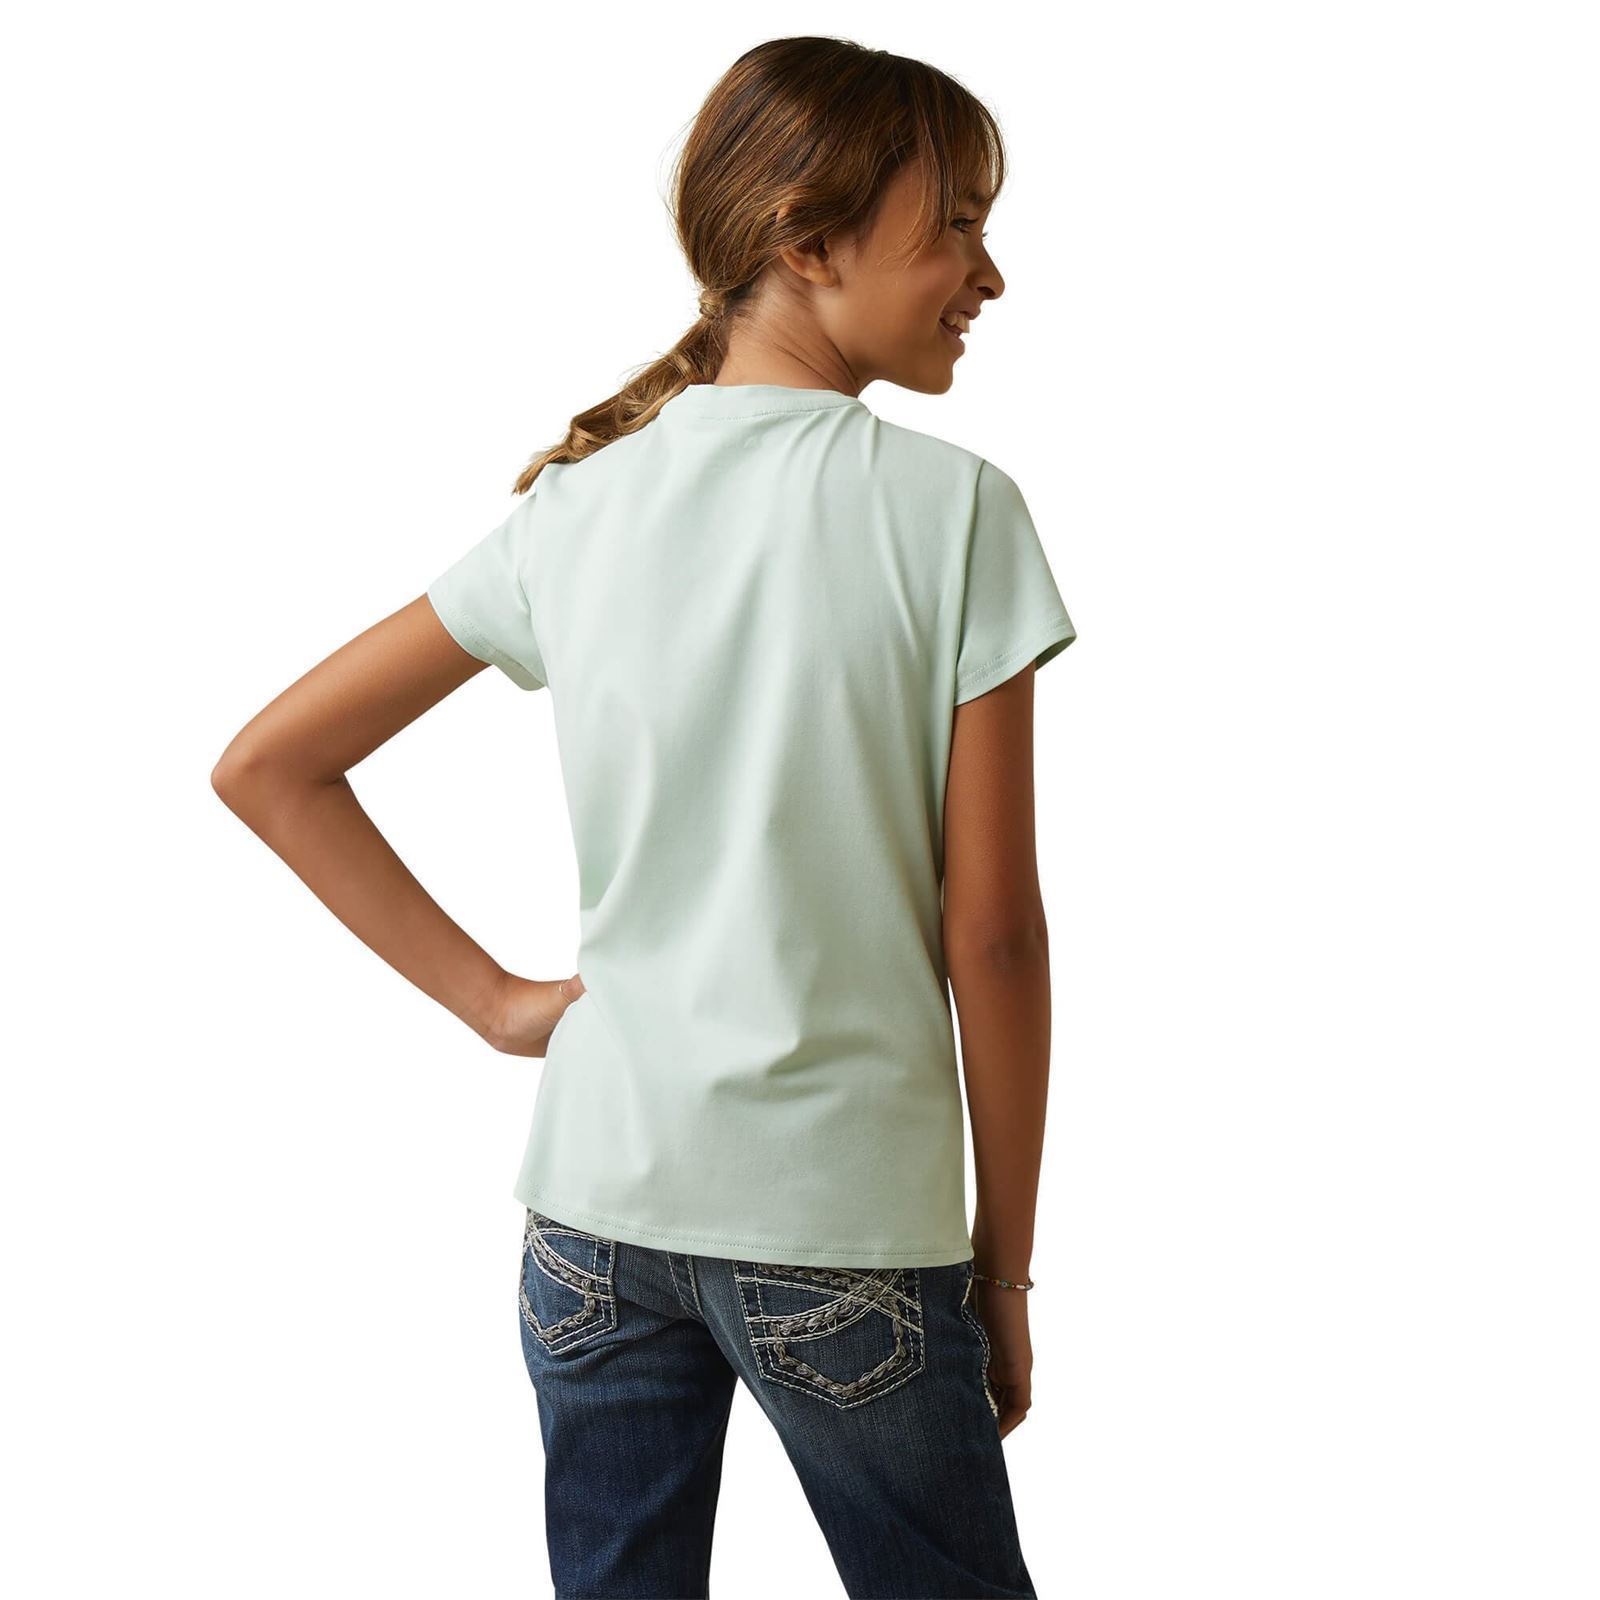 Camiseta Ariat unisex Harmony color verde claro tallaje infantil - Imagen 5